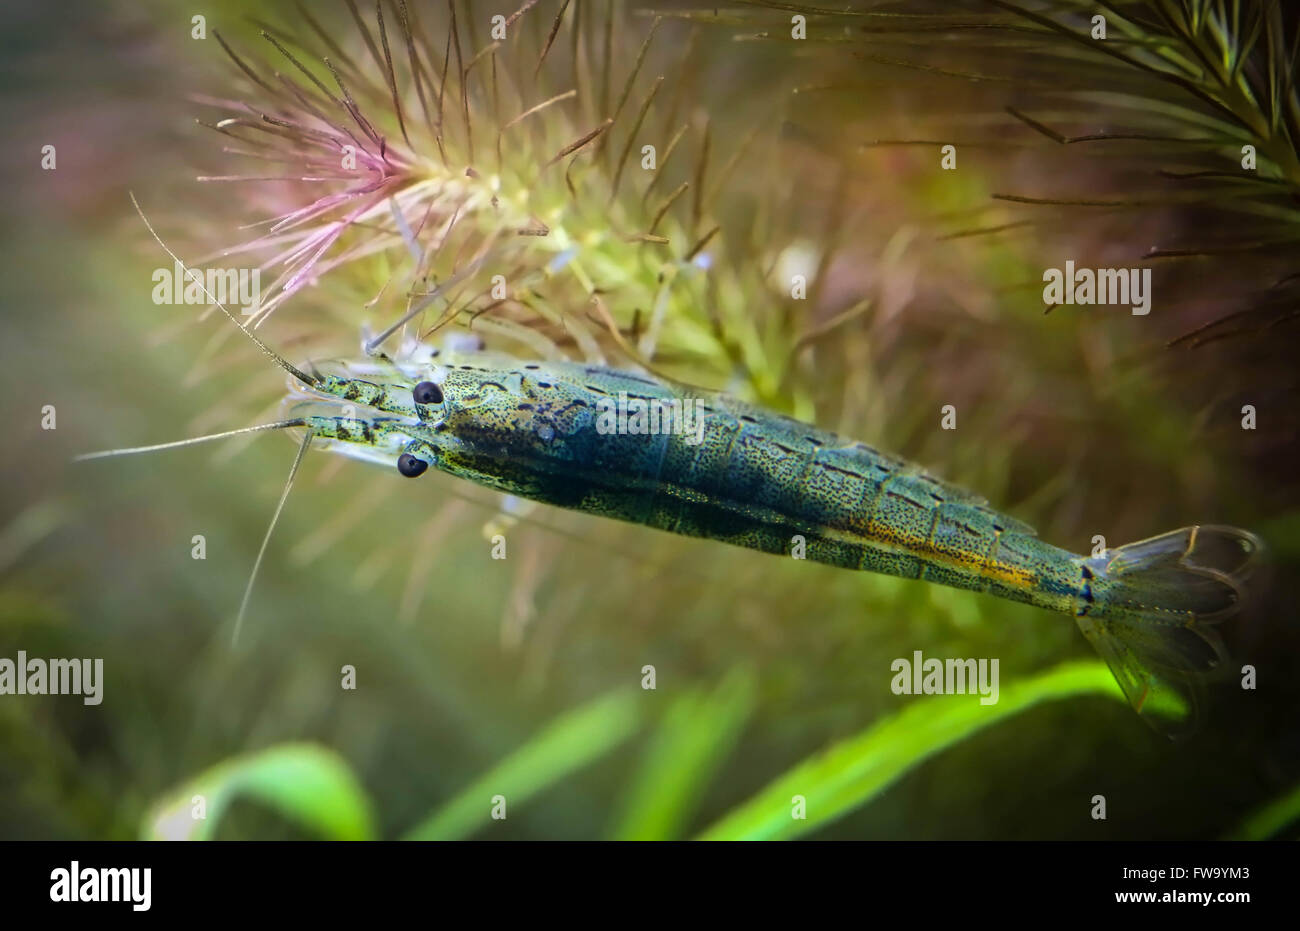 Closeup of a Yamato Shrimp in a planted aquarium Stock Photo